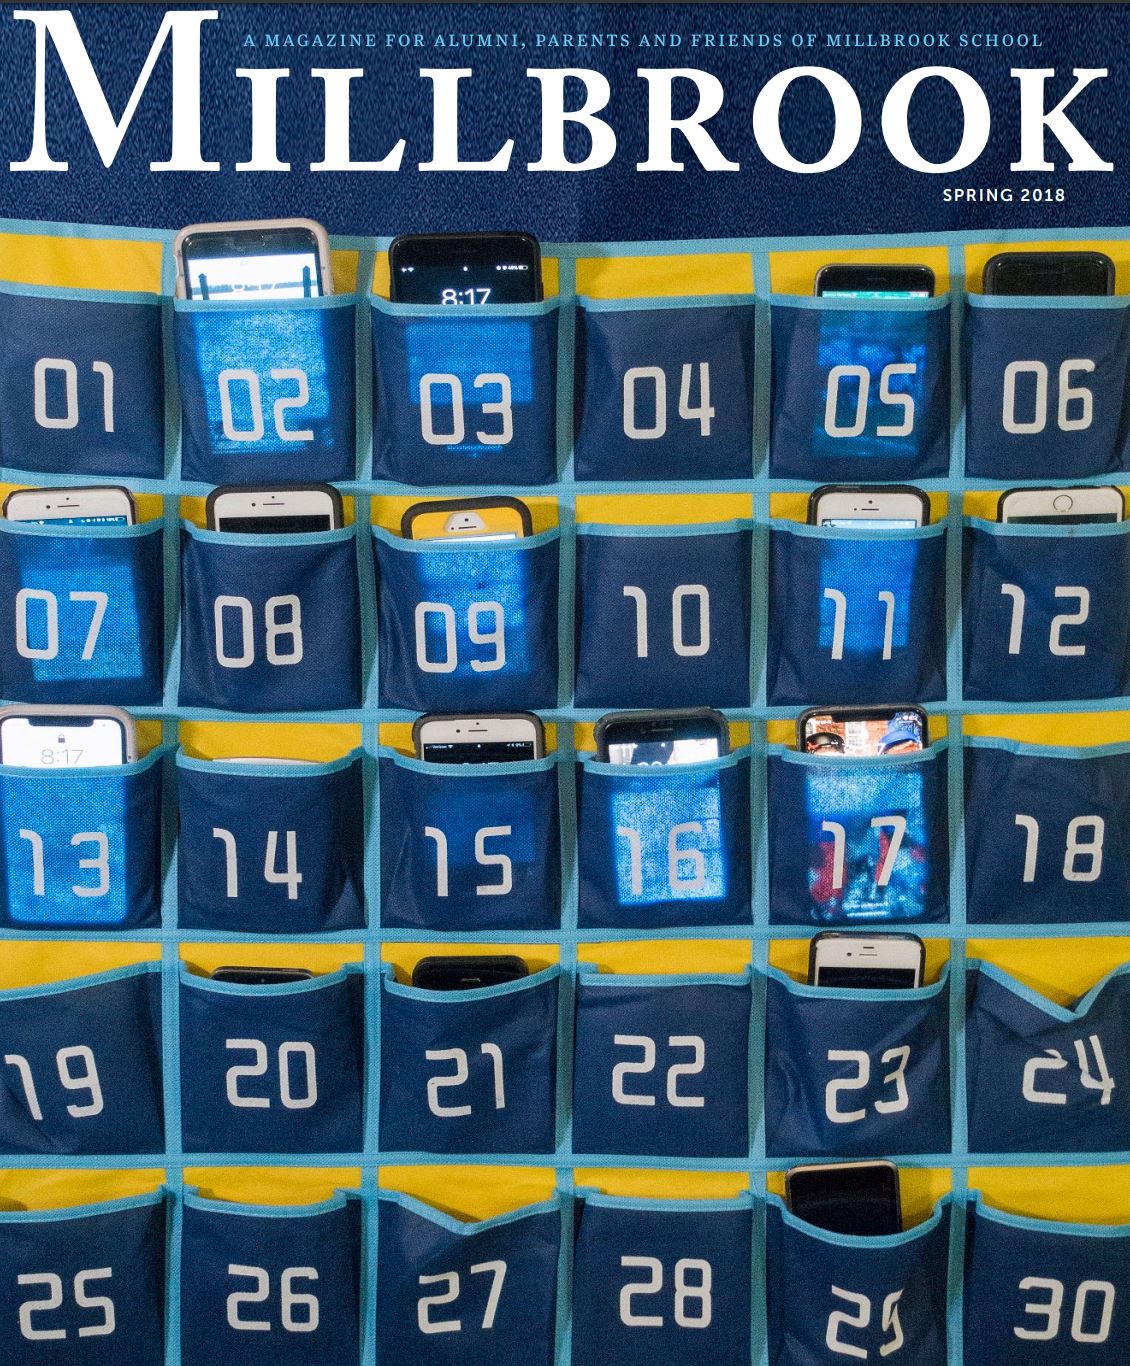 Millbrook Magazine